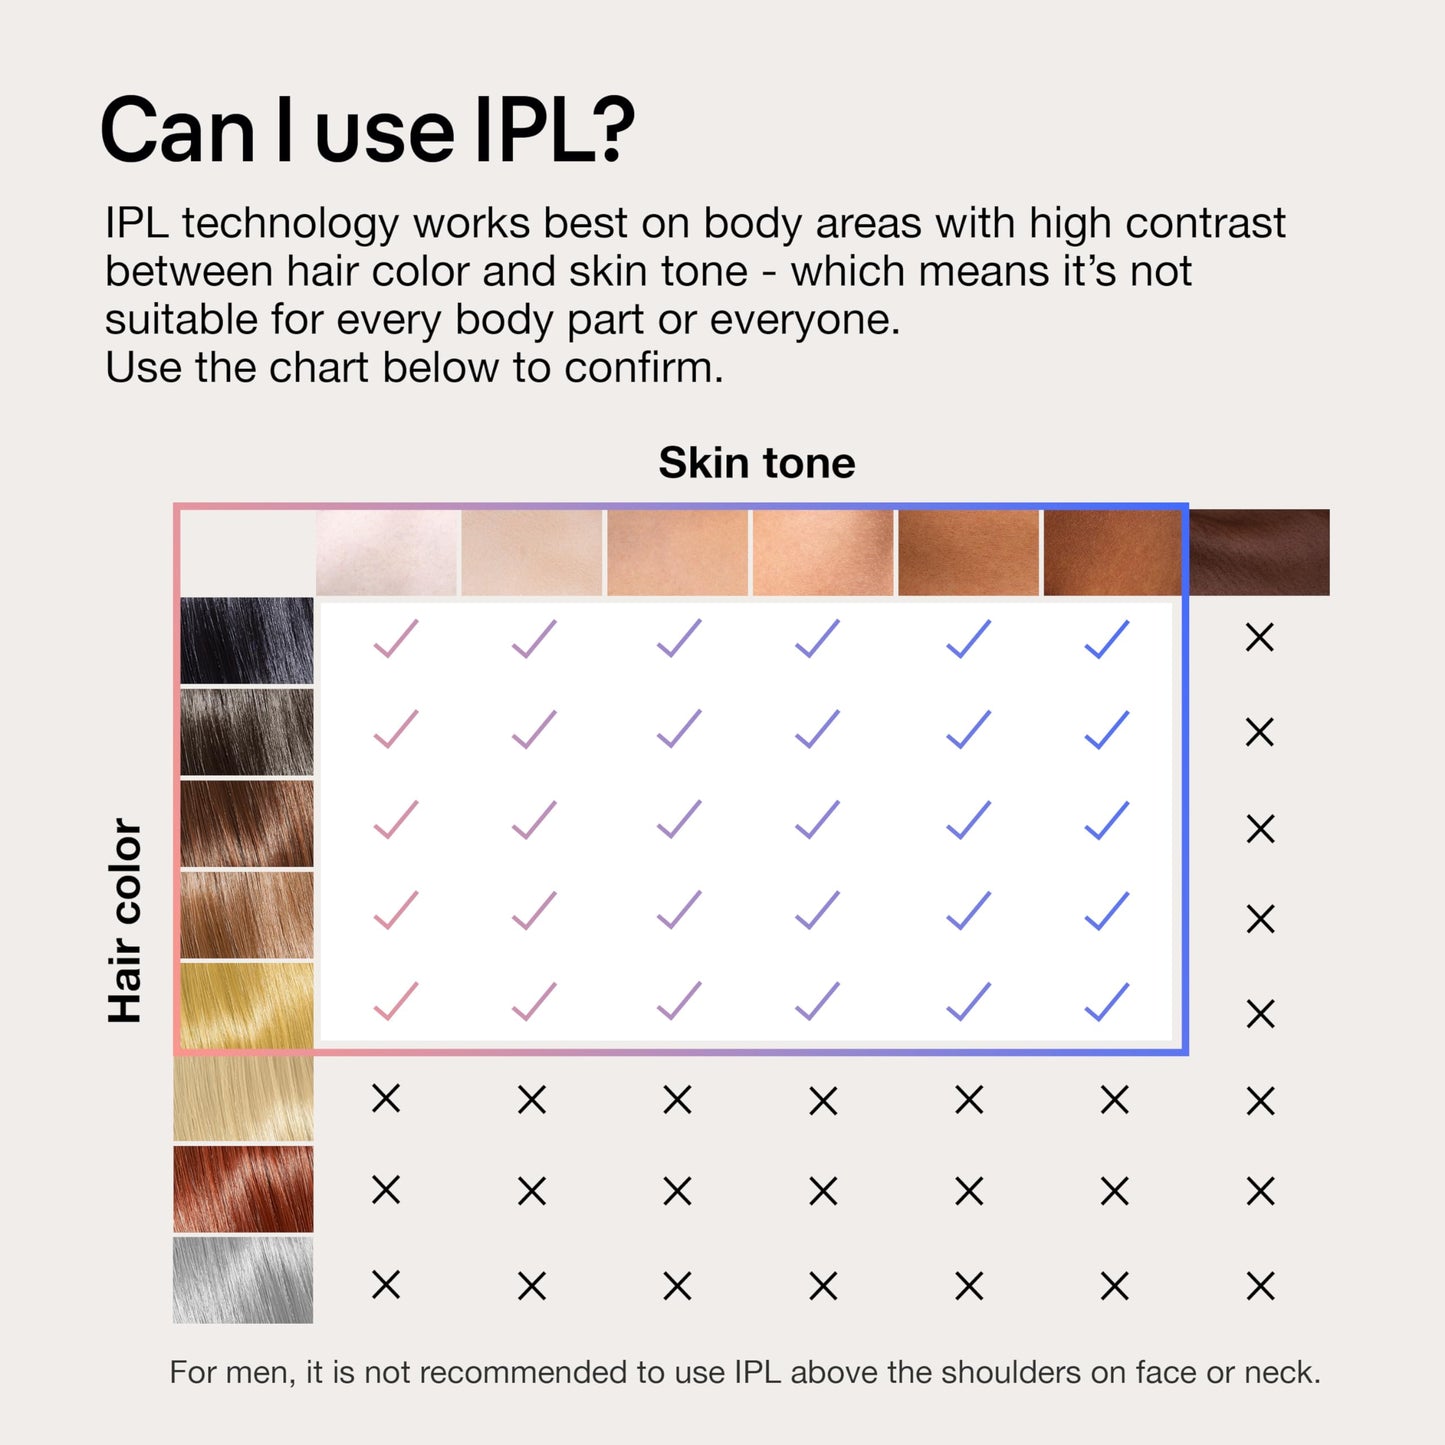 Braun IPL Long-lasting Laser Hair Removal Device for Women & Men, Skin i·Expert, at Home Hair Removal, w/ Free App, Vanity Case, Venus Razor, 4 Smart